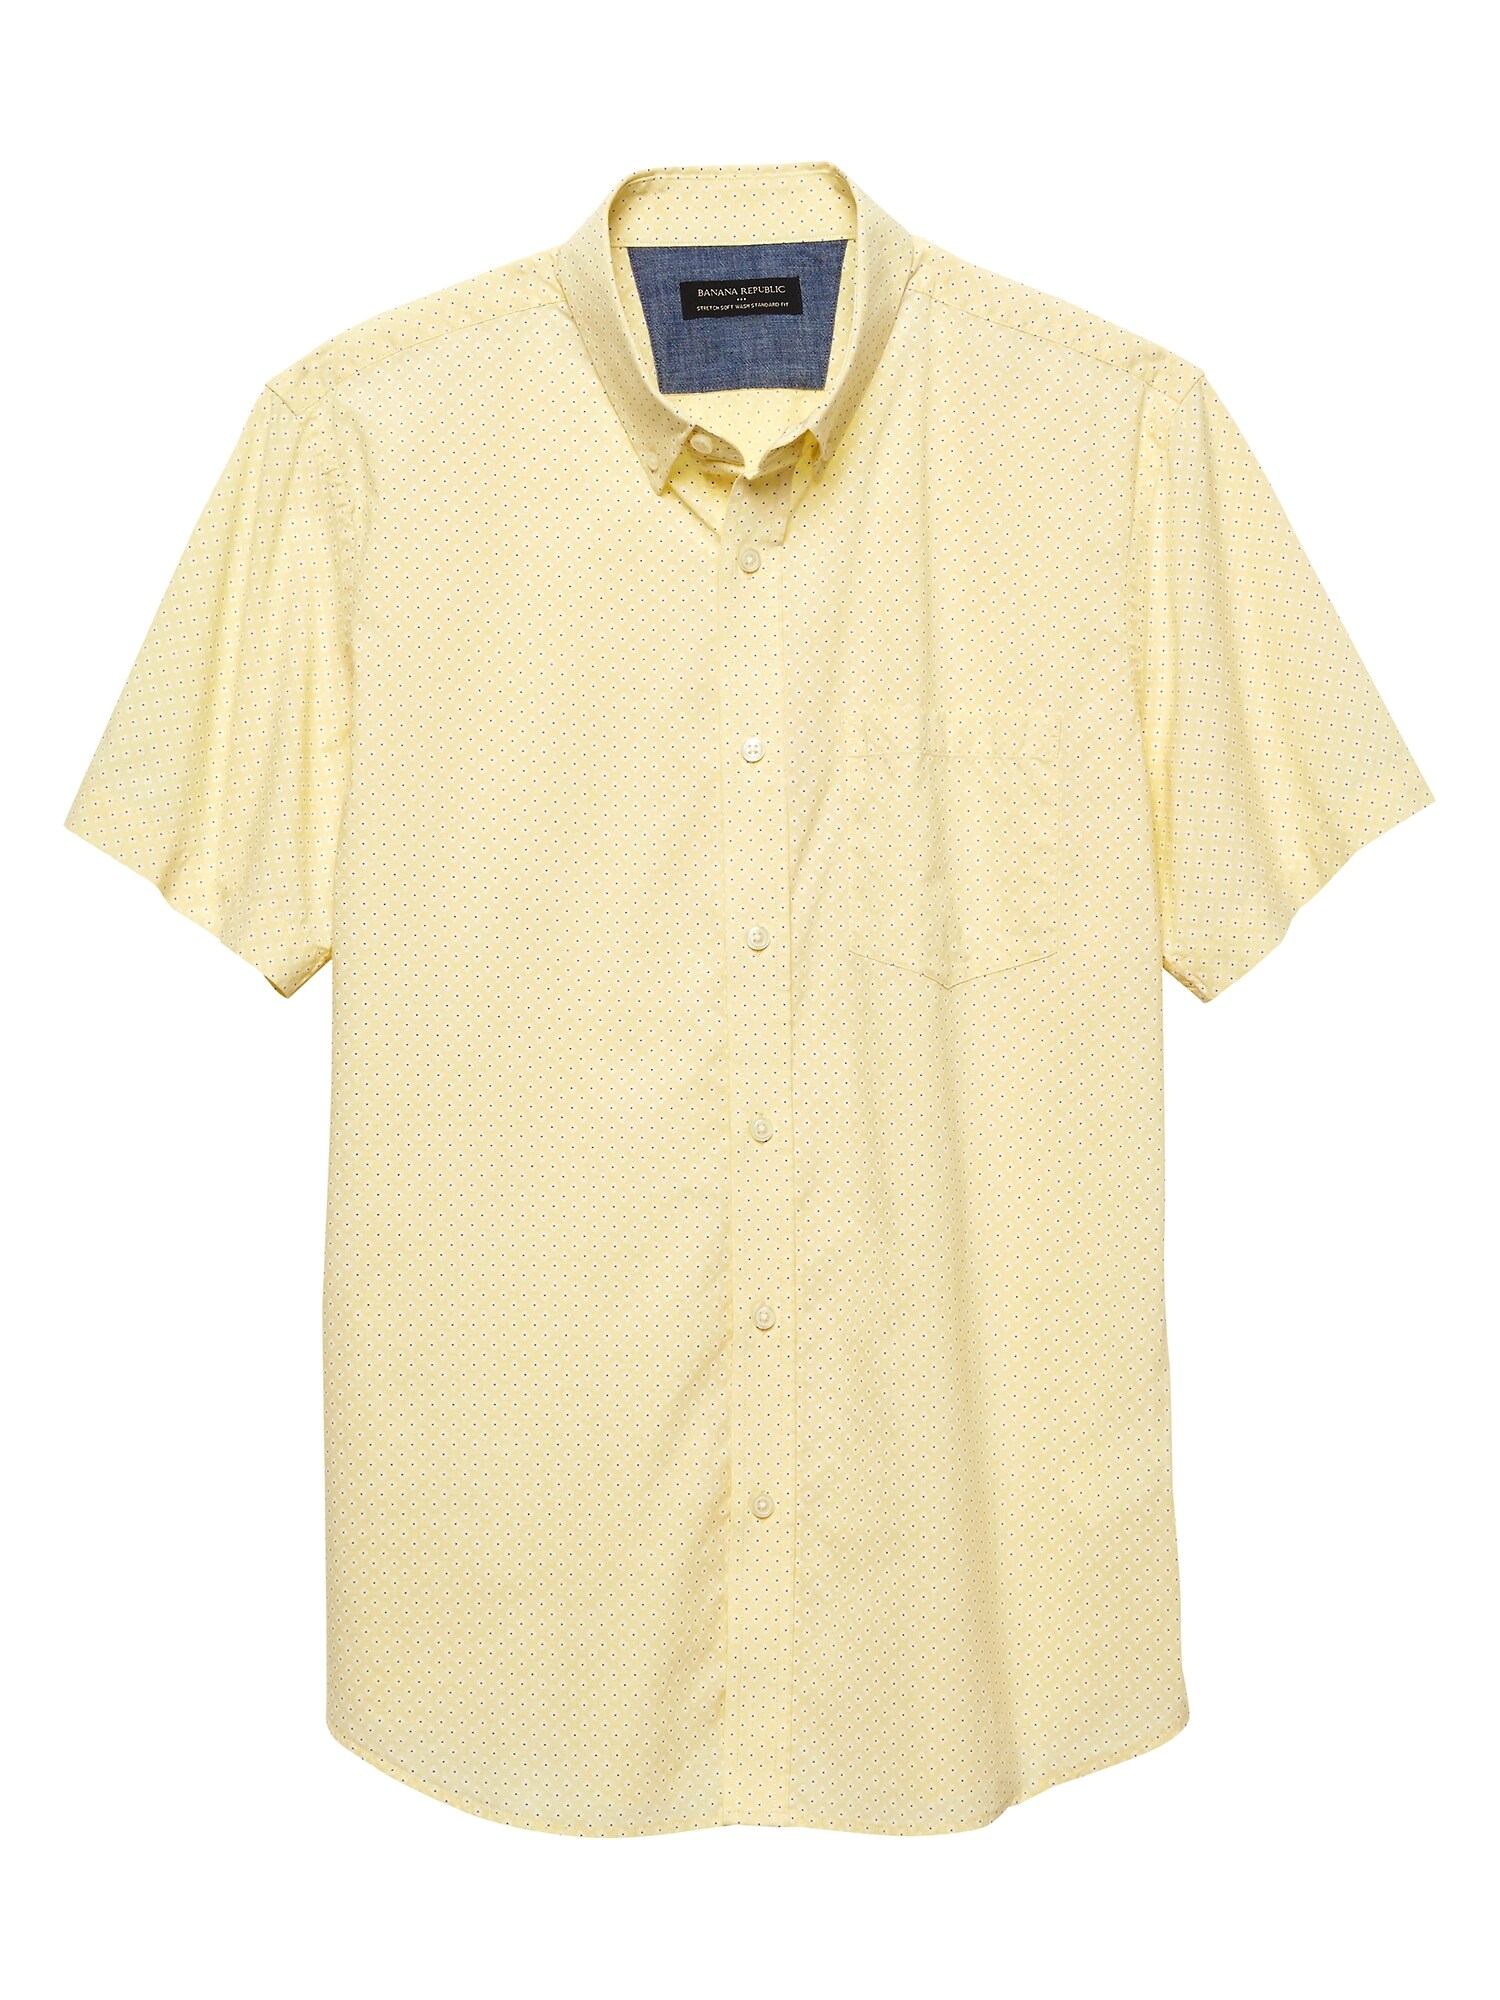 Standard-Fit Soft Wash Stretch Yellow Dot Shirt